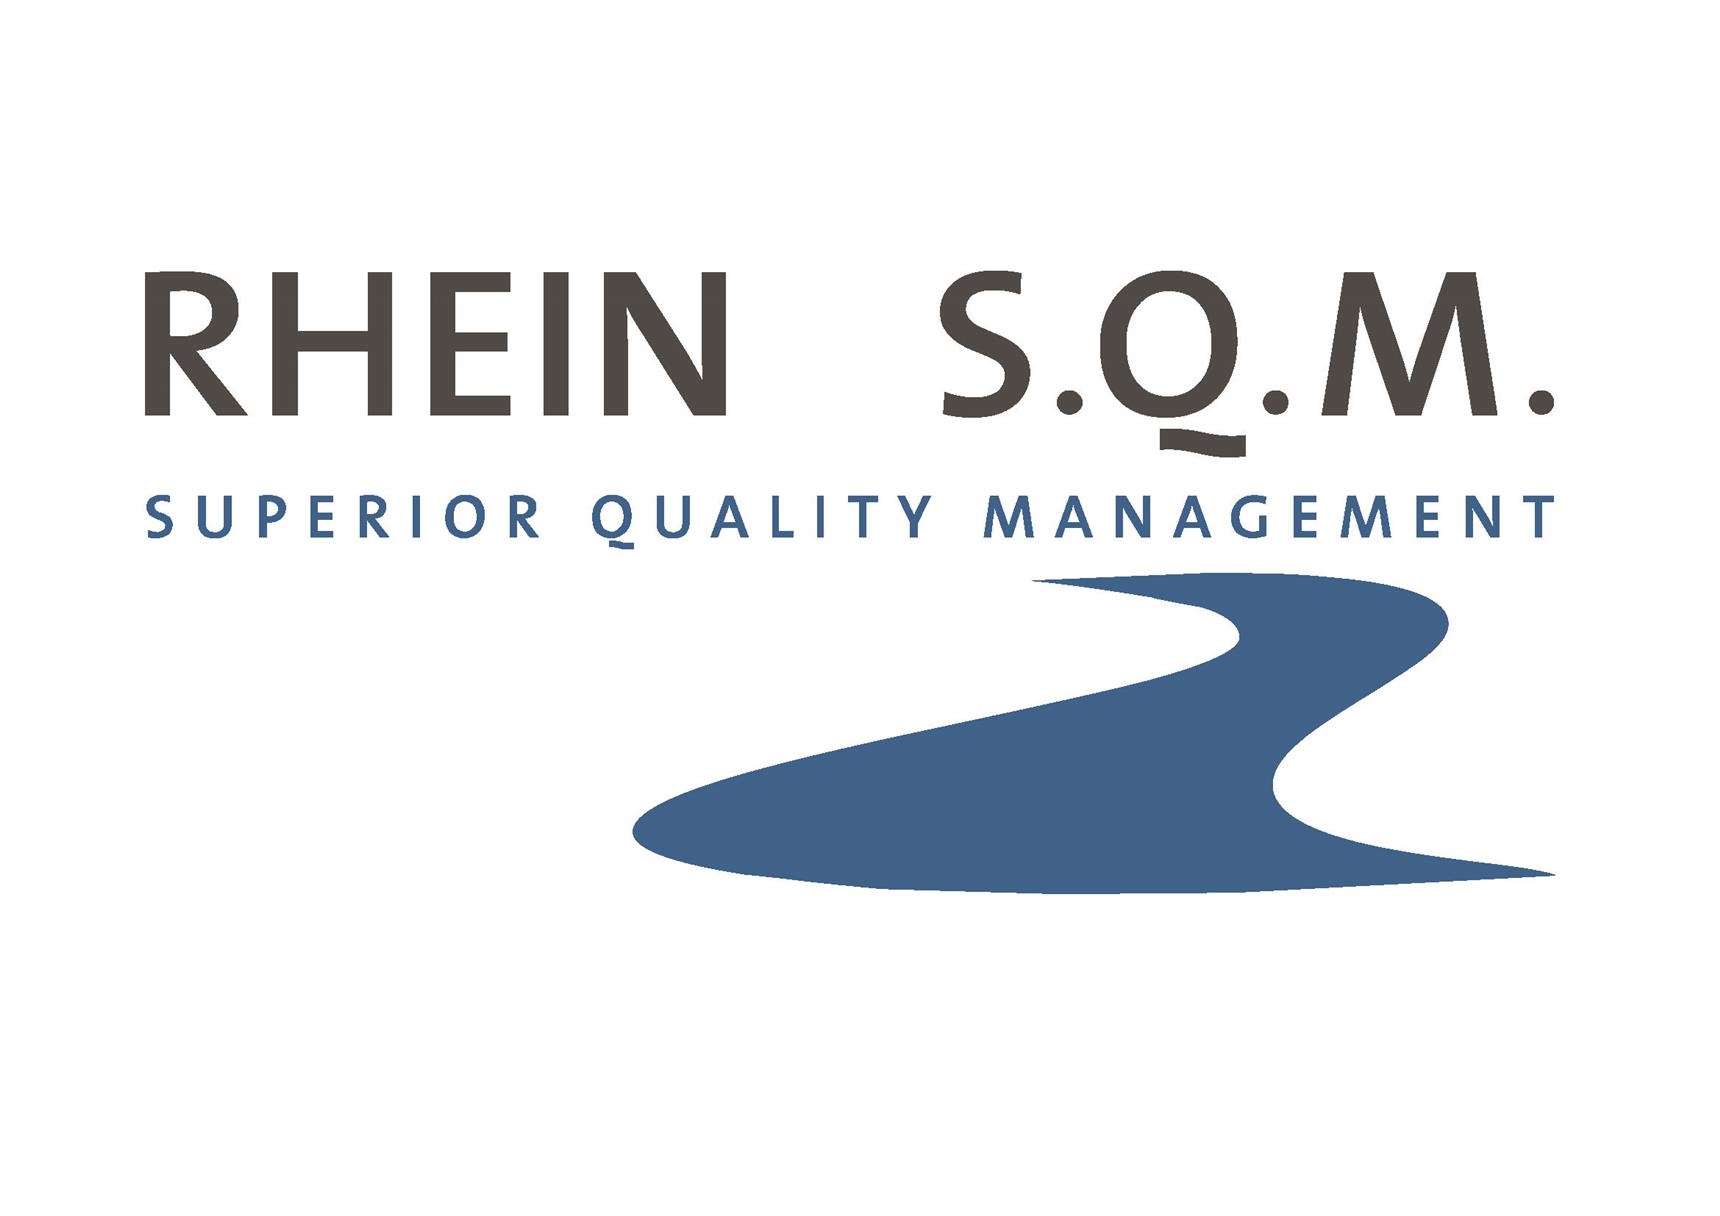 Logo SQM